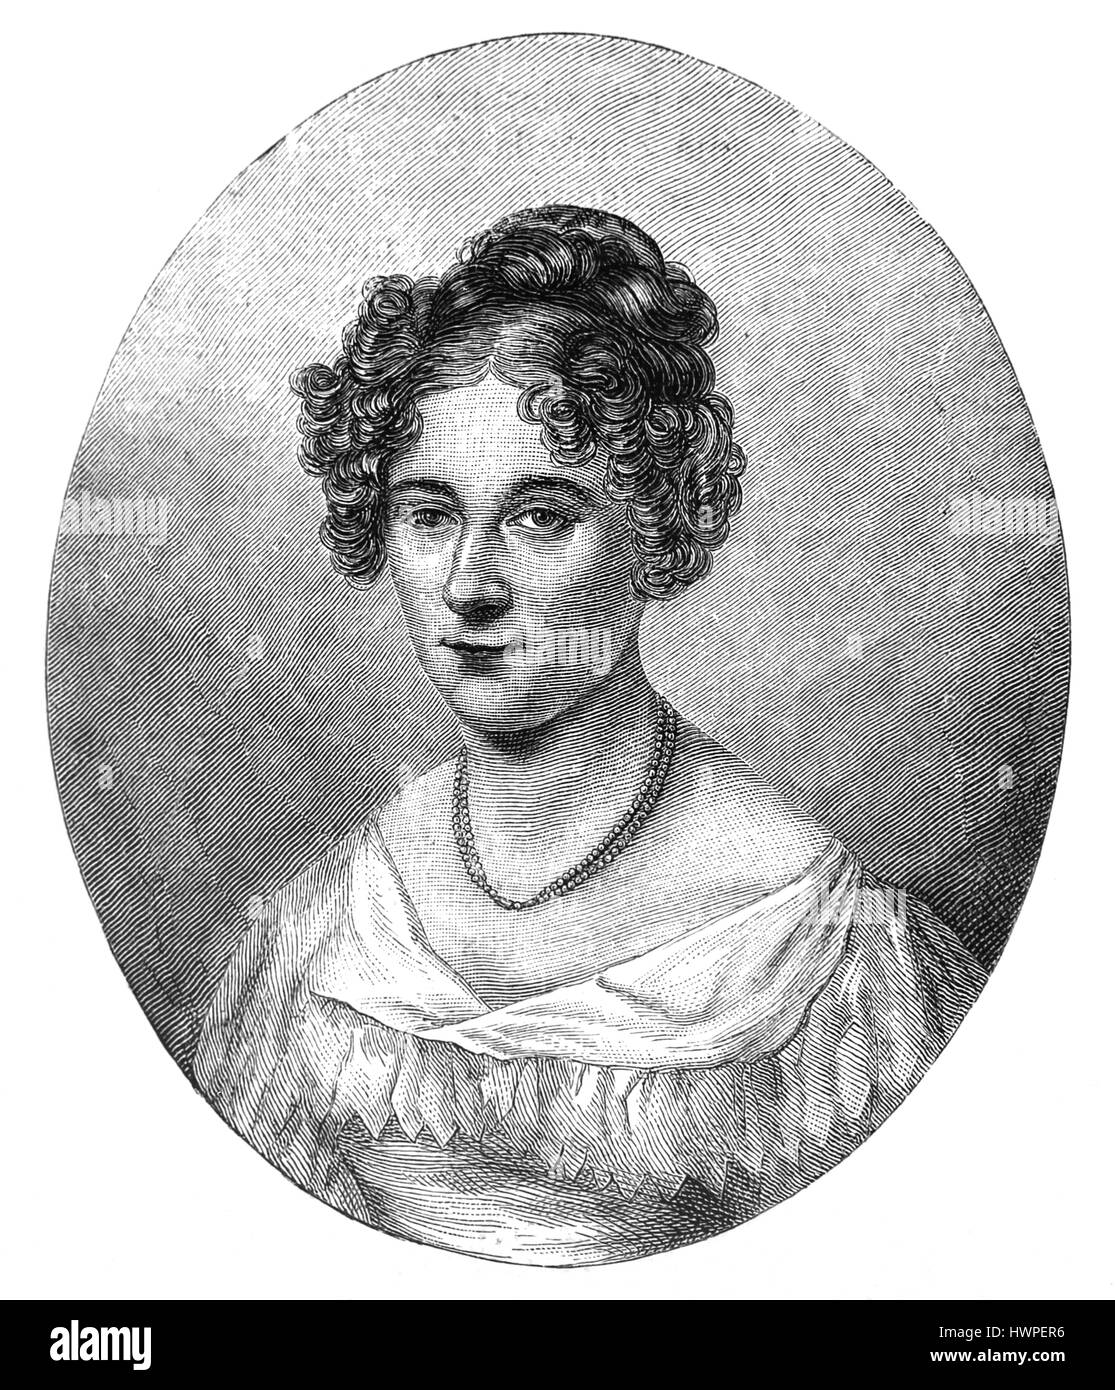 Rahel Varnhagen (1771-1833). German writer. Portrait. Engraving, 1883. Colored. Stock Photo